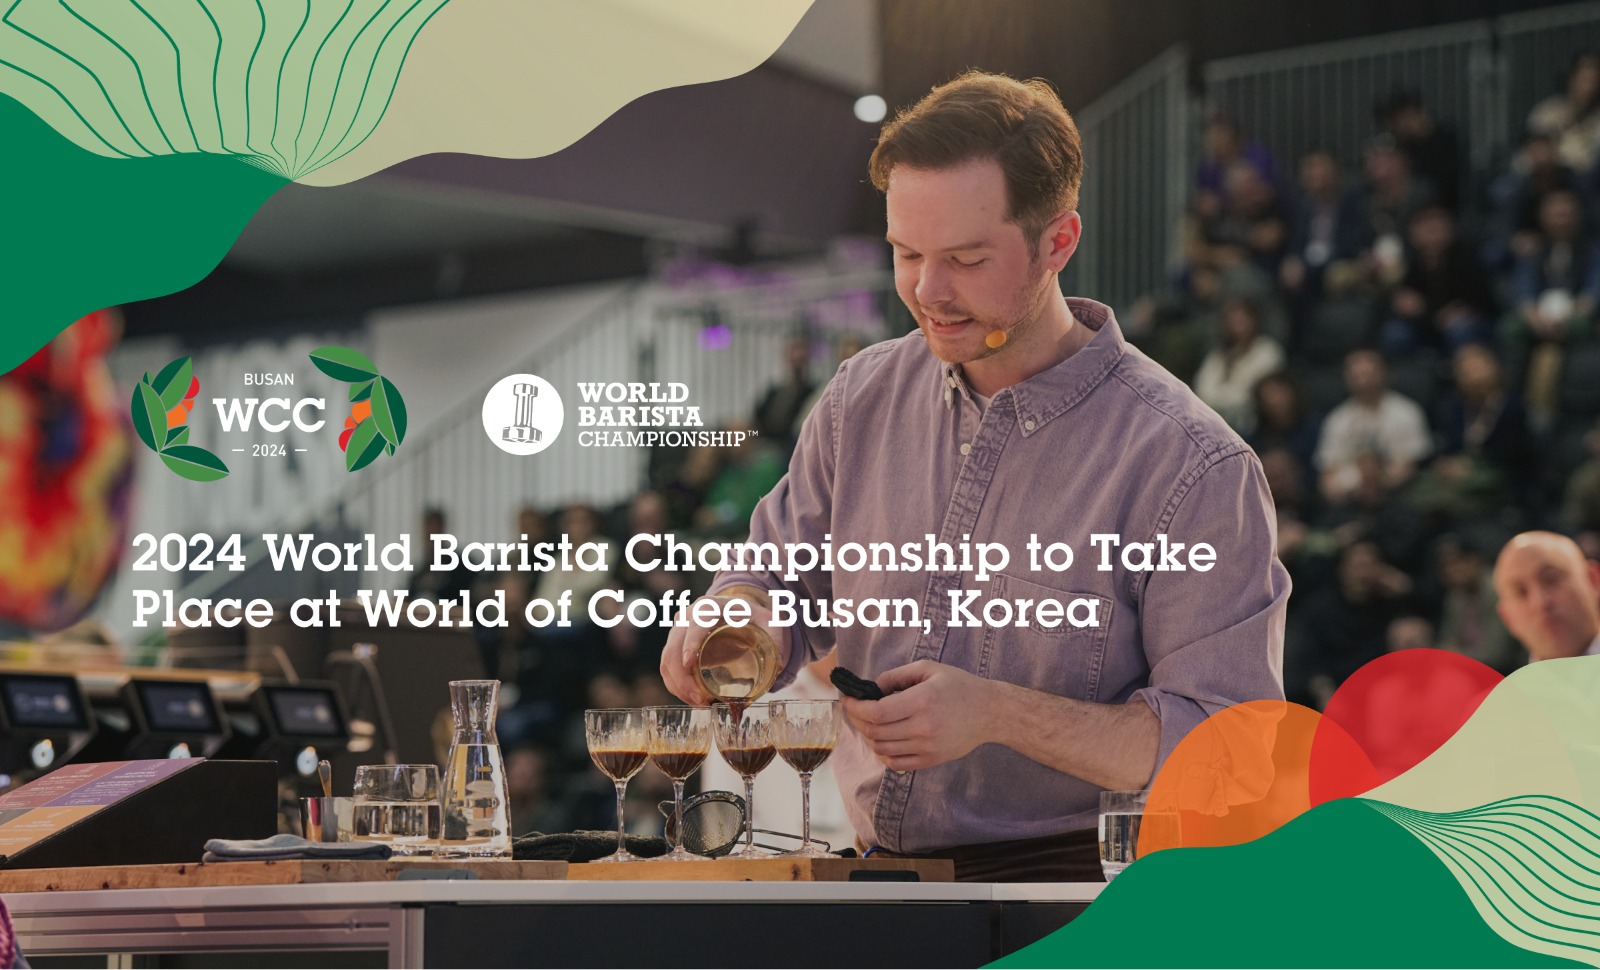 World Barista Championship Amsterdam 2018 - World Barista Championship